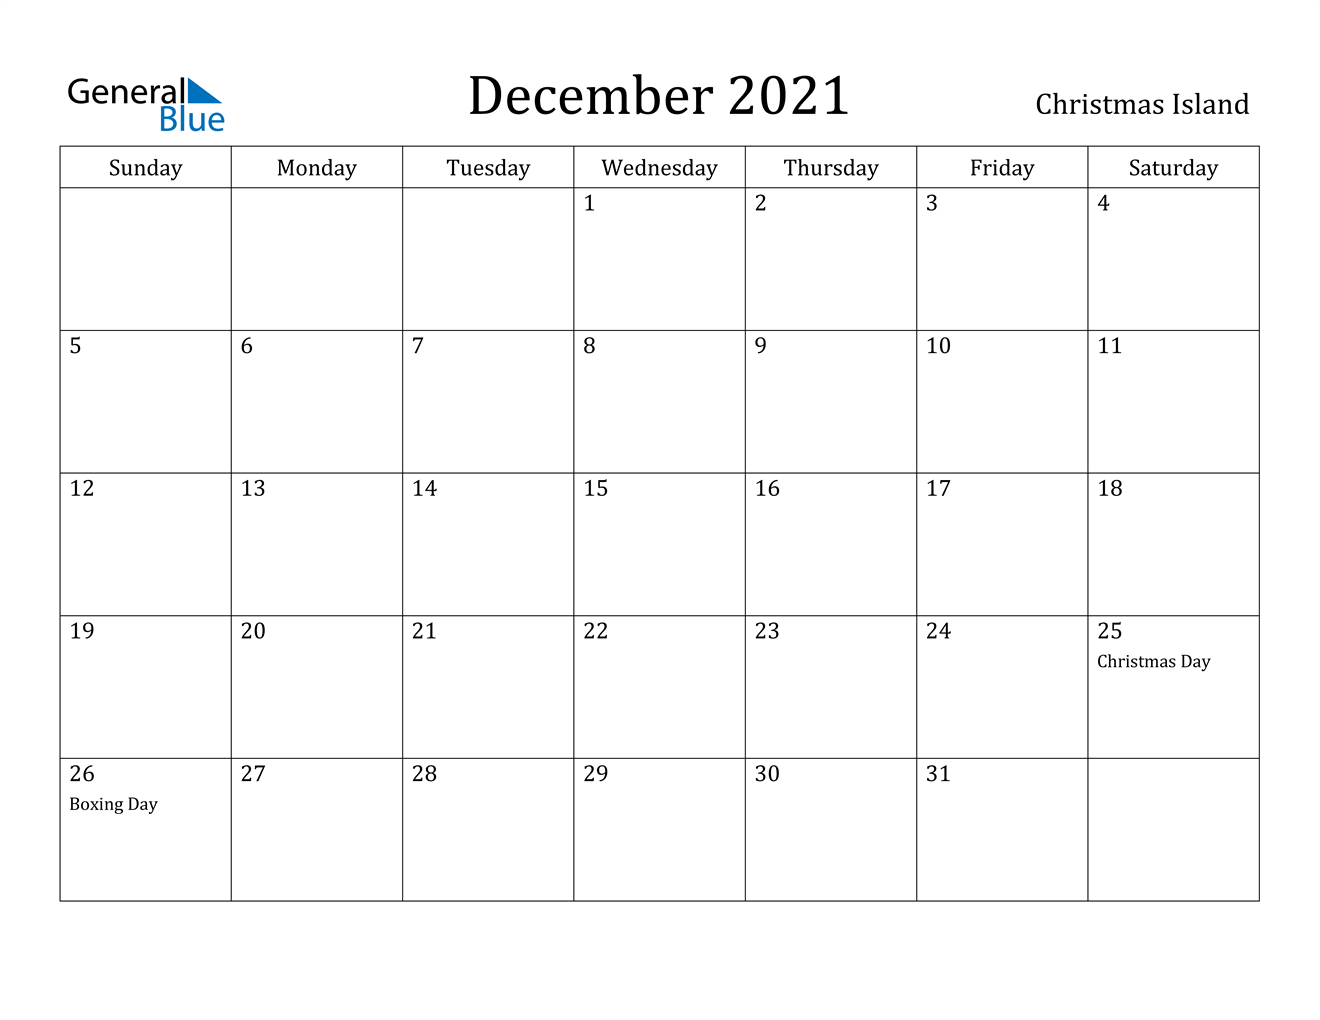 December 2021 Calendar - Christmas Island 2021 Calendar From January To December